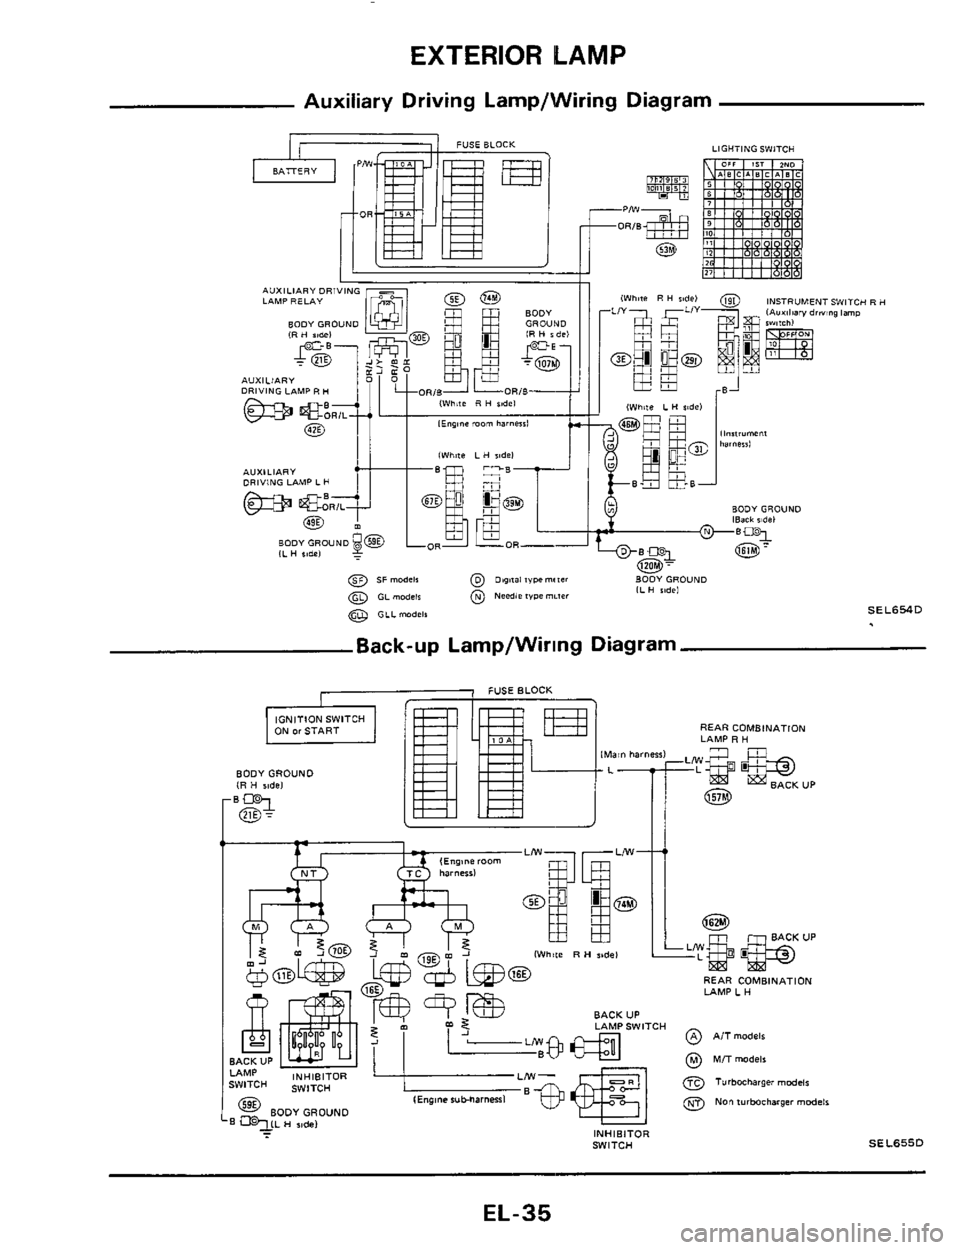 bowie vet box wiring diagram